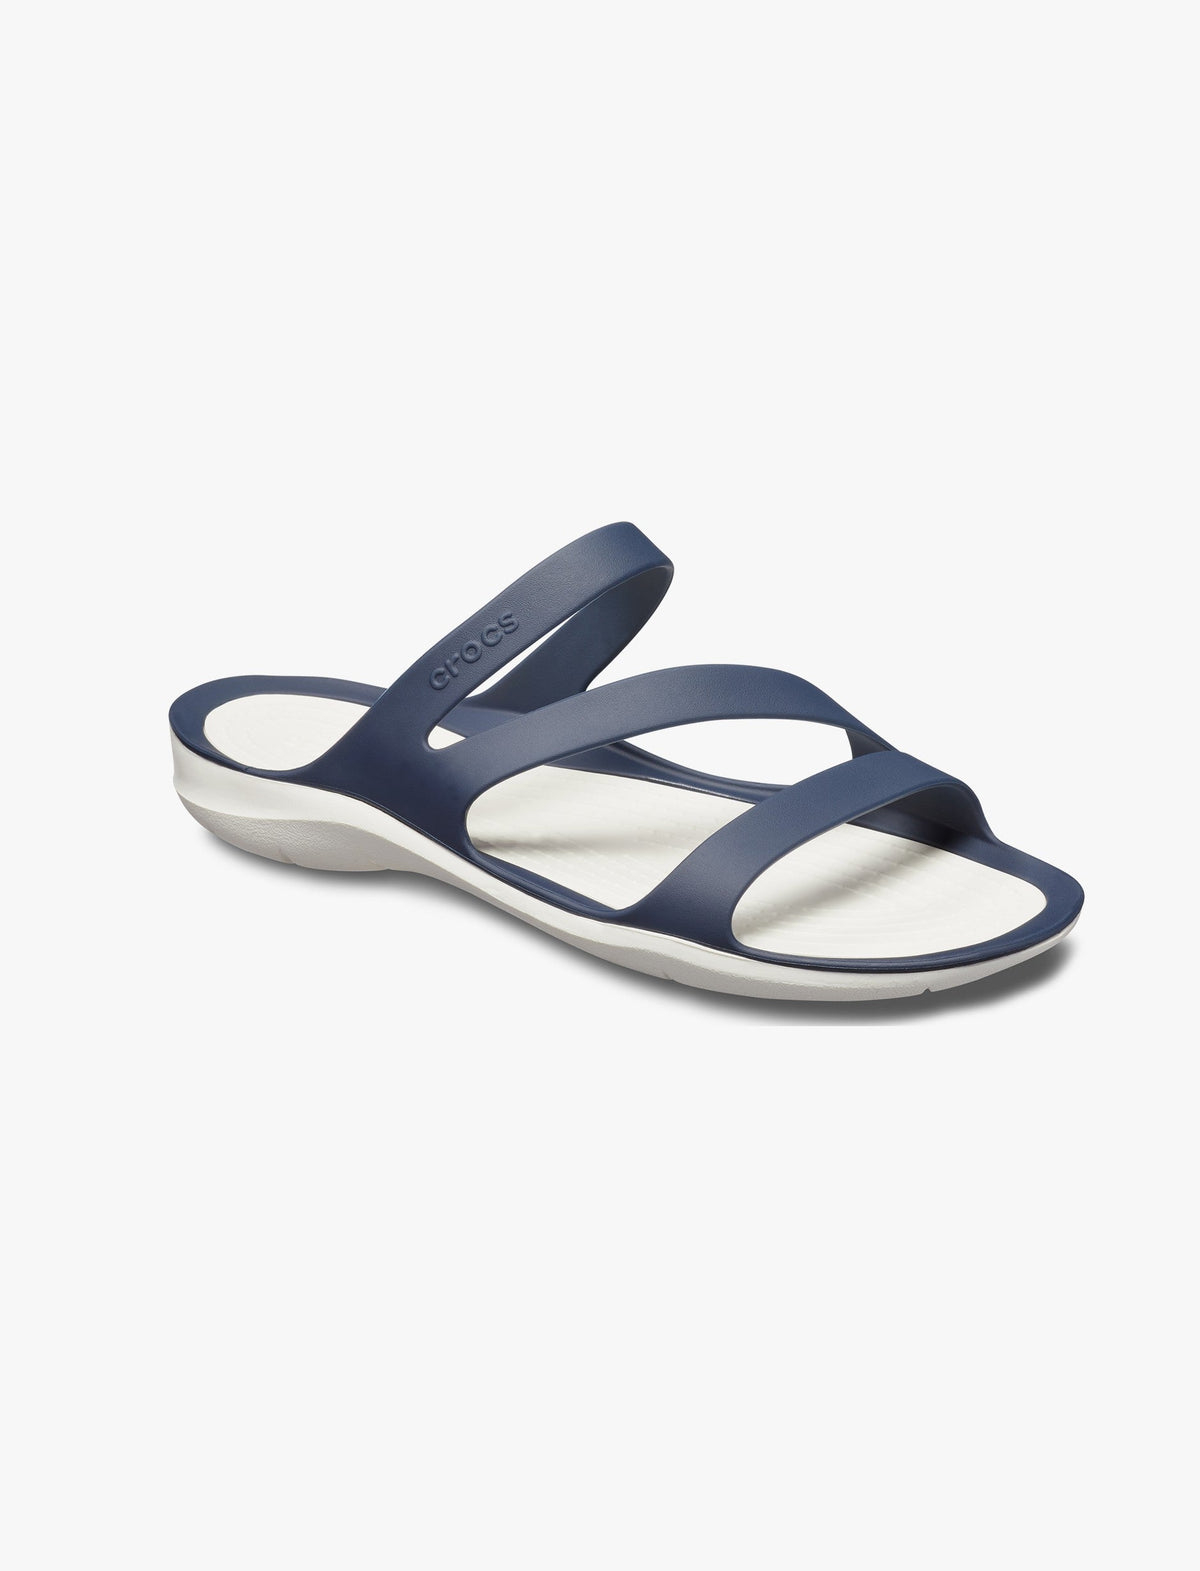 Crocs Swiftwater Sandal - כפכפים לנשים קרוקס רצועות בצבע נייבי/לבן-Crocs-41-42-נאקו